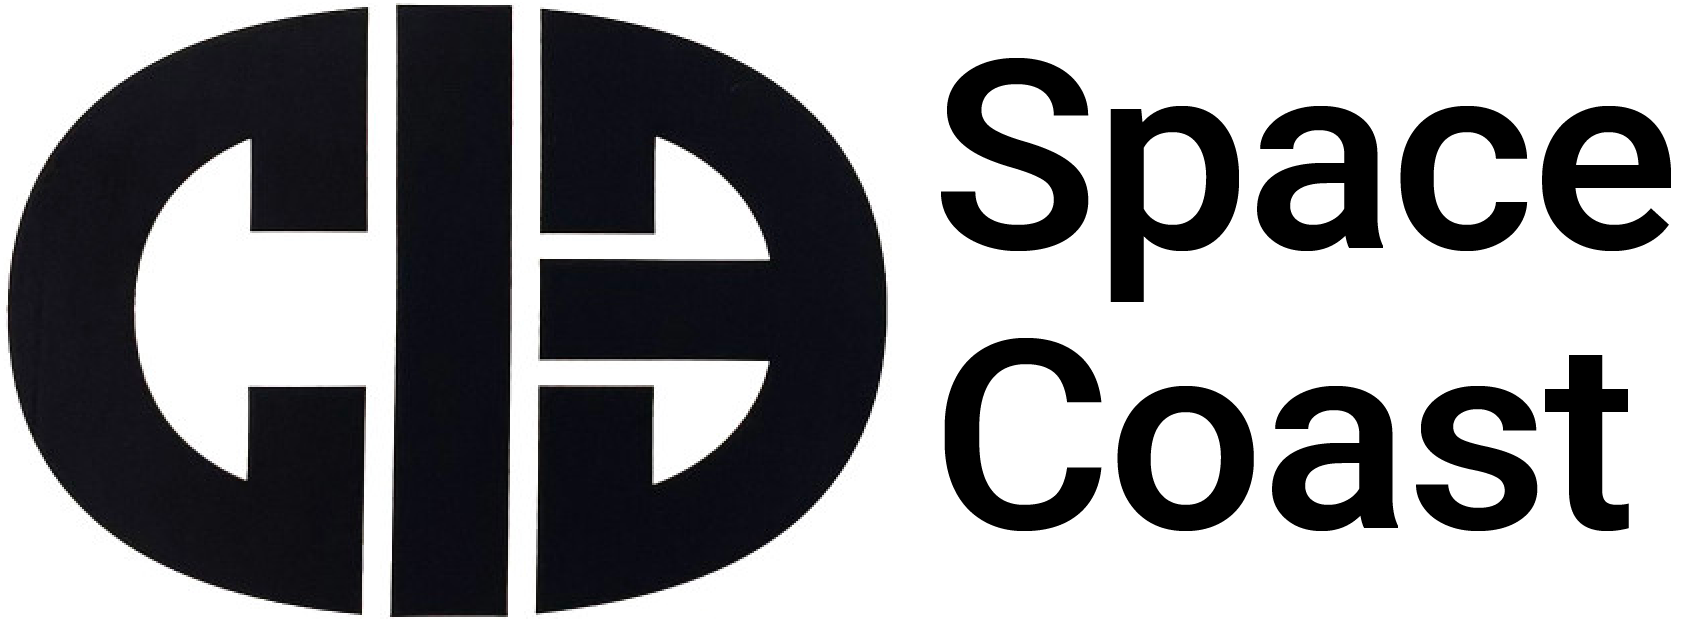 CIB Space Coast Logo